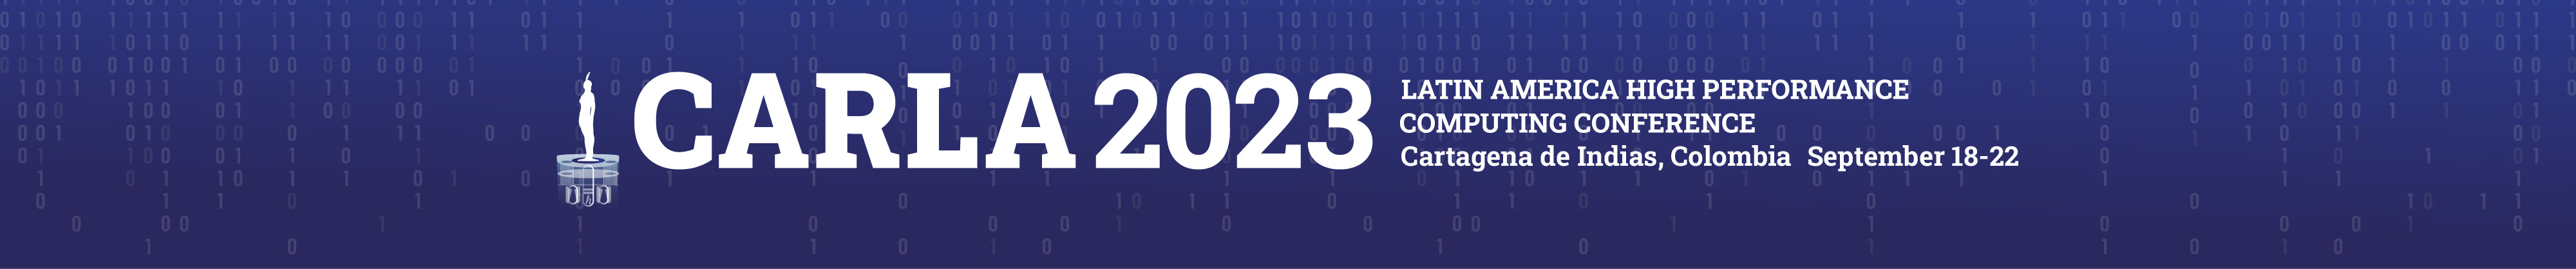 LATIN AMERICA HIGH PERFORMANCE COMPUTING CONFERENCE  CARLA 2023